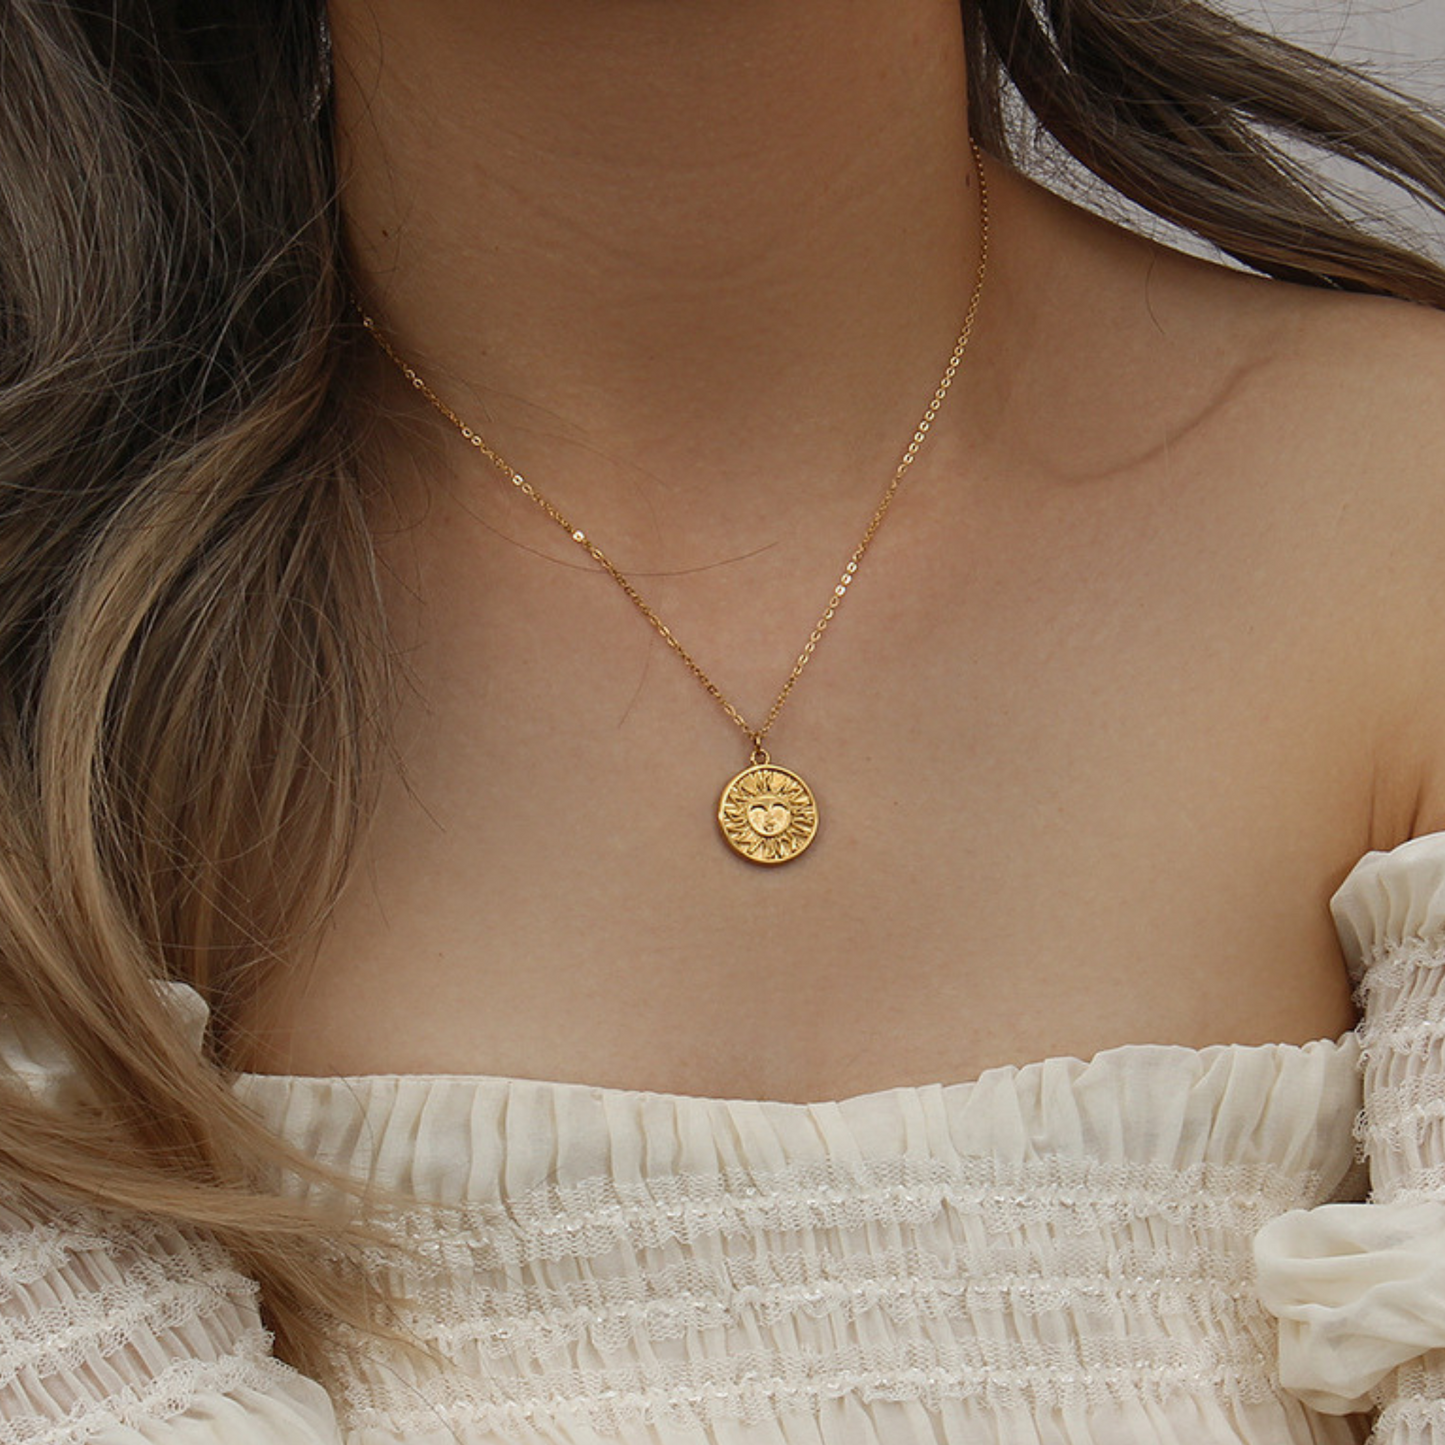 Gold Sun Coin Pendant Necklace for Women